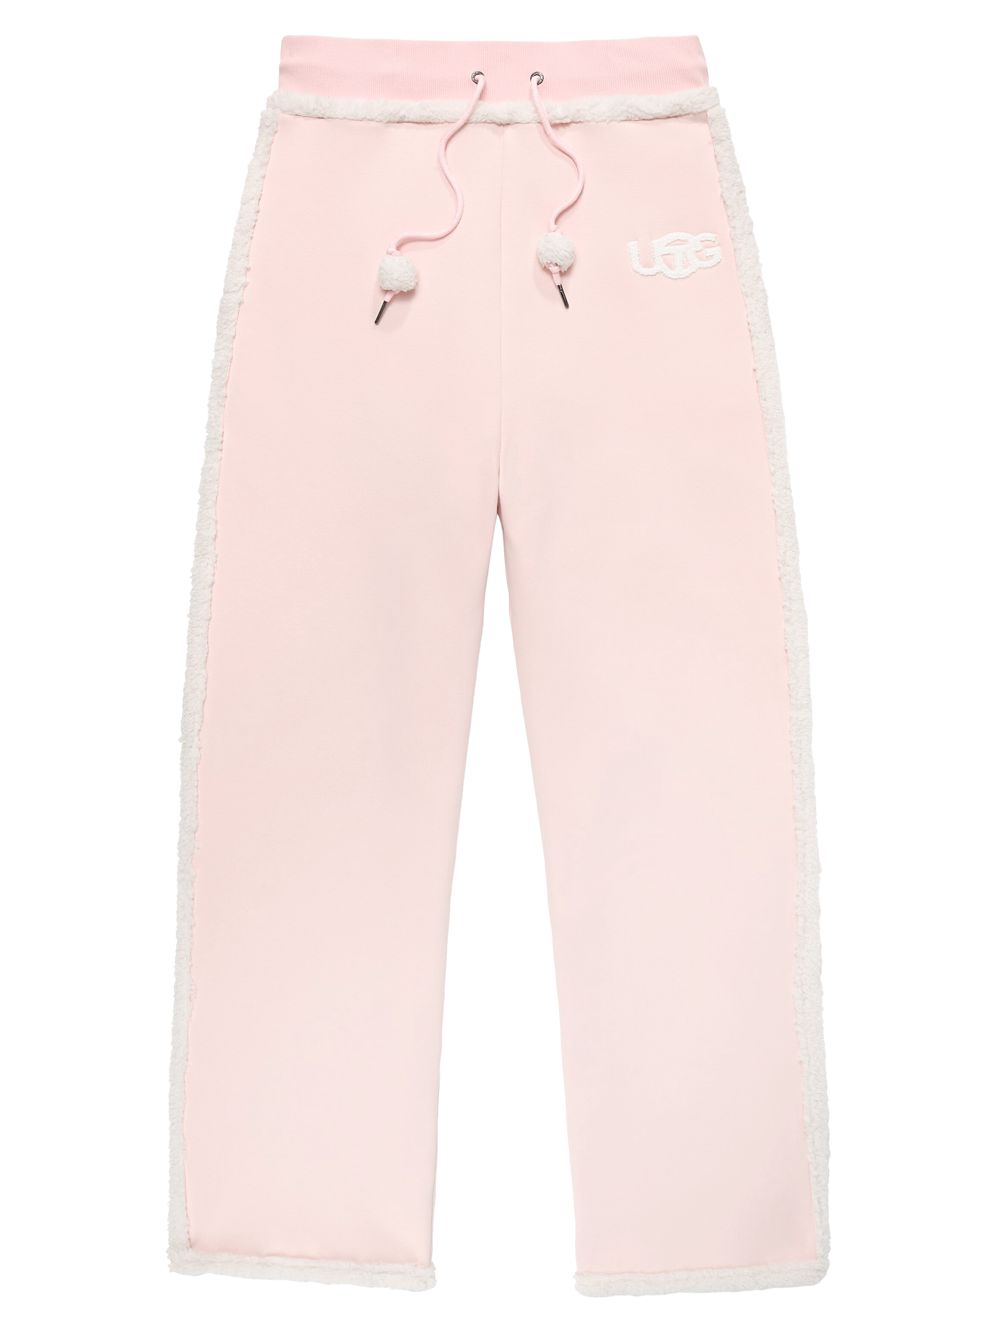 Спортивные штаны Ugg x Telfar Sherpa UGG x Telfar, розовый